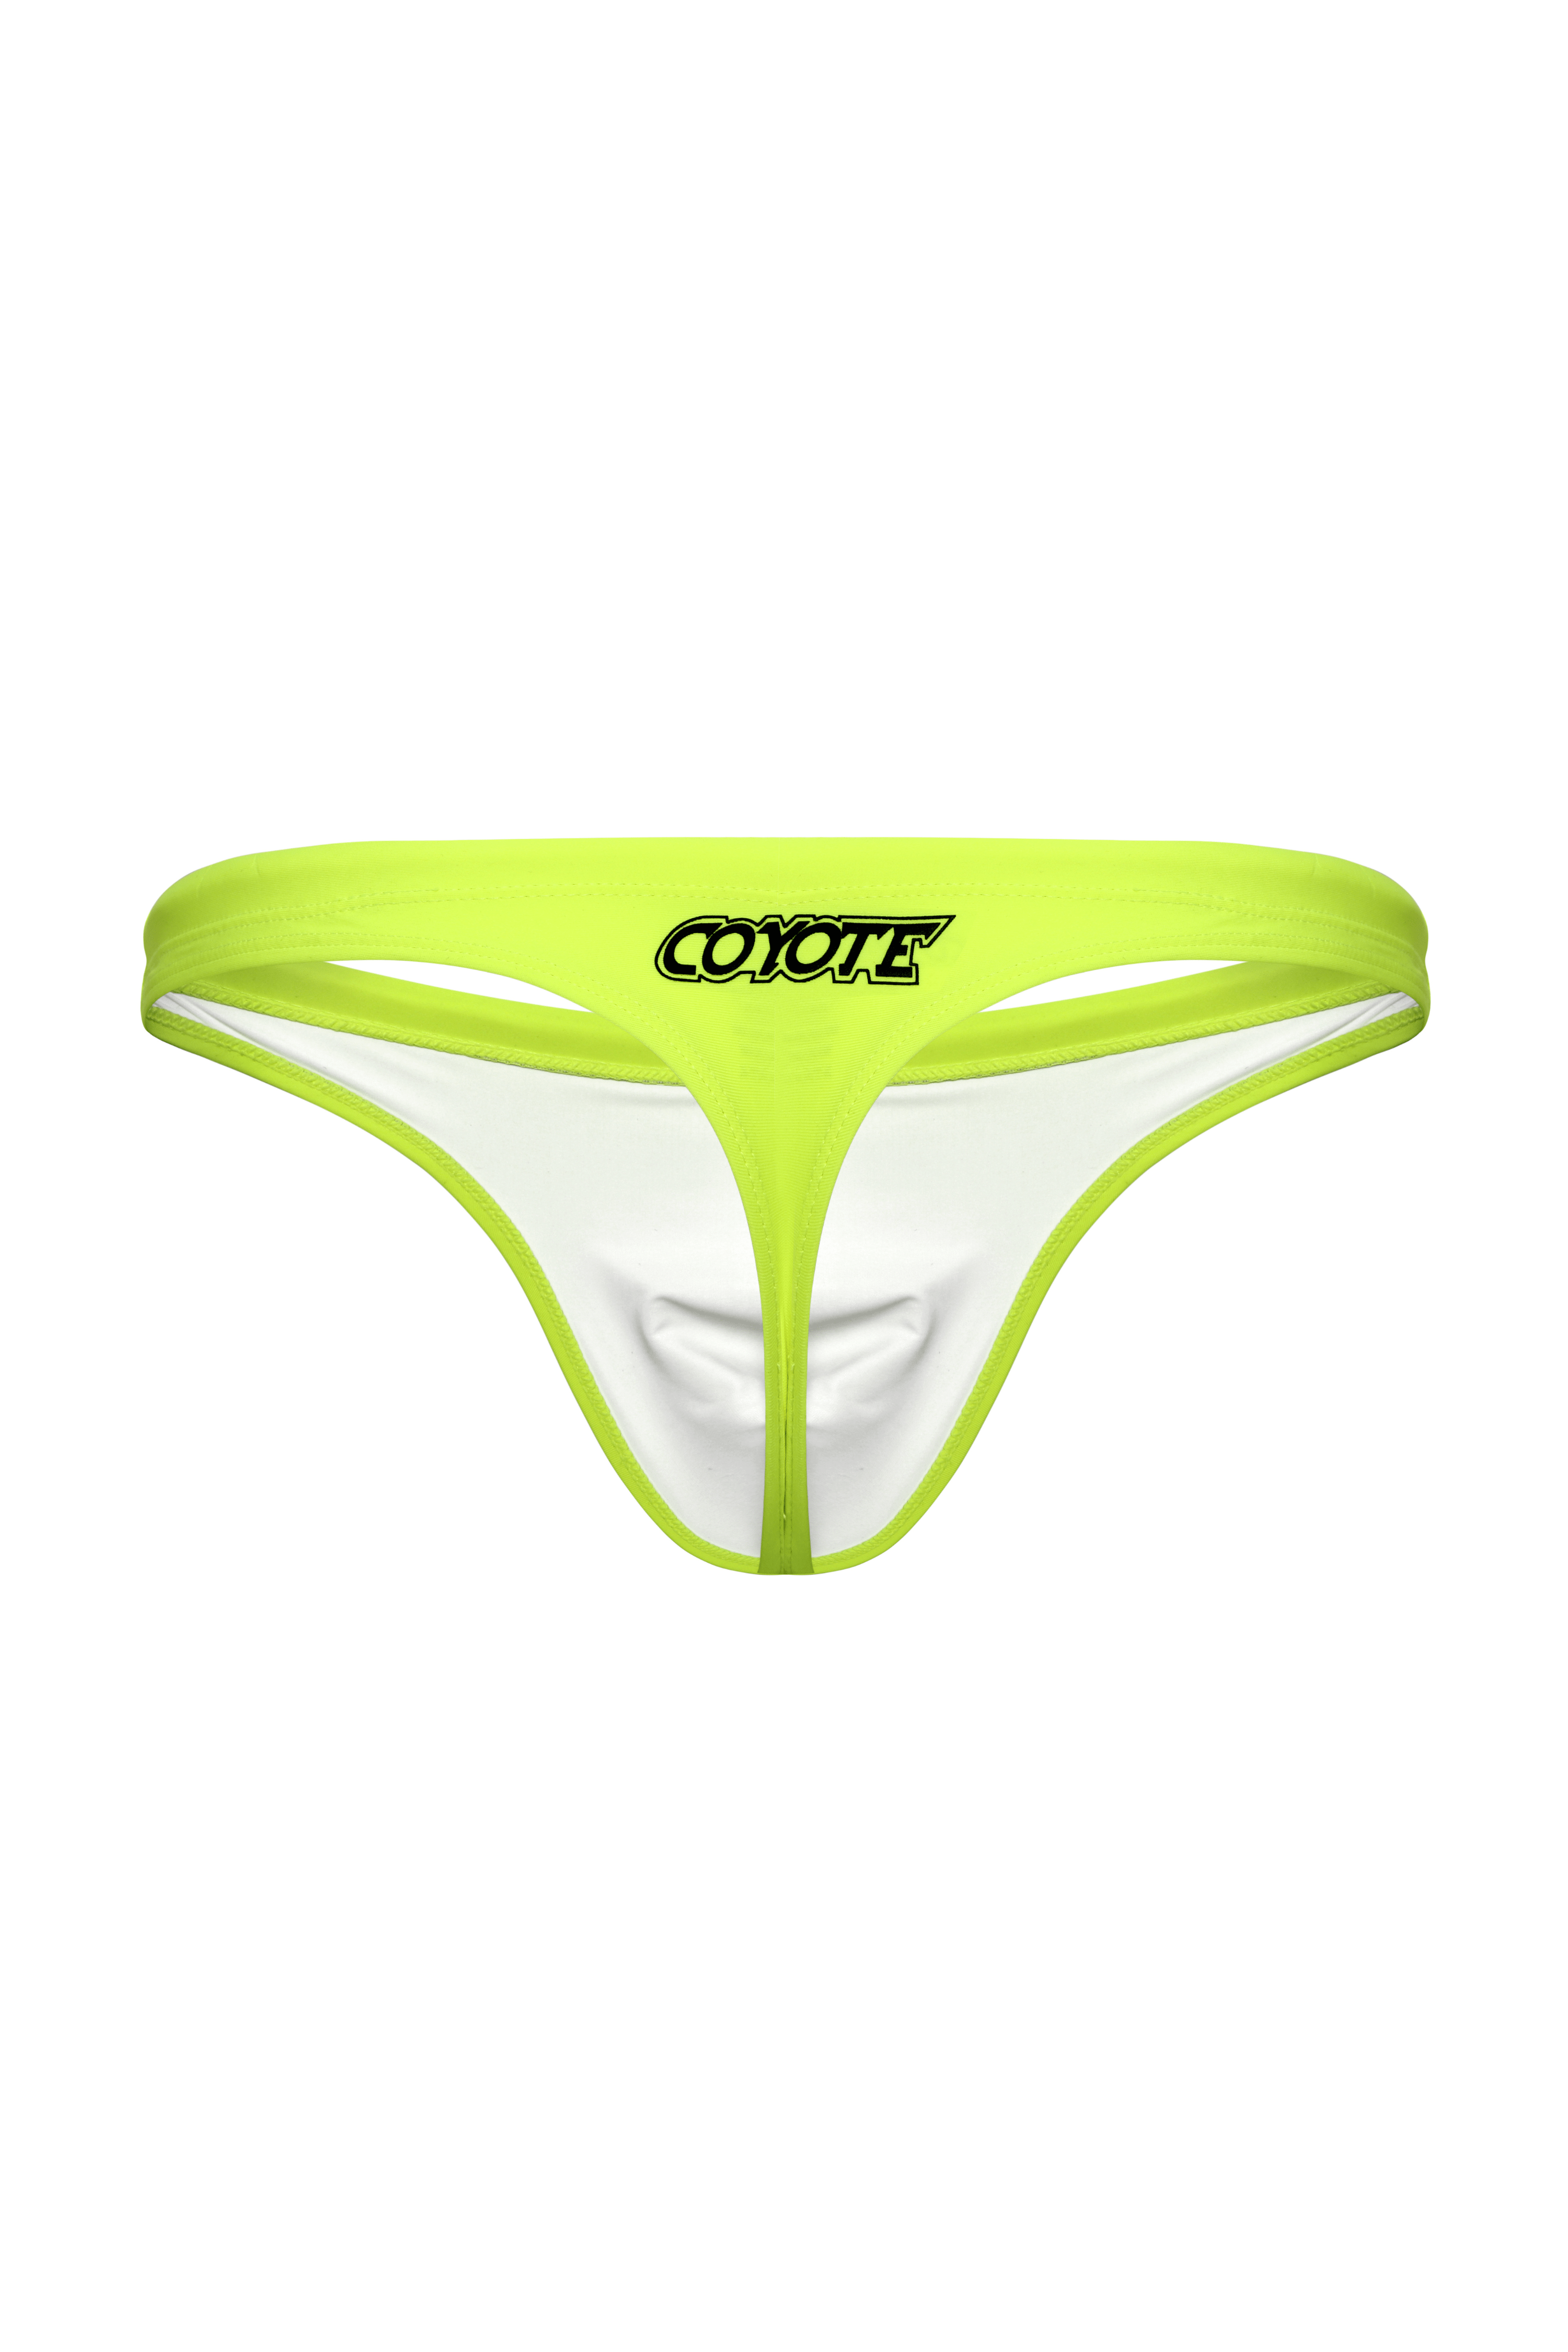 Classic Swim Thong | Lime - Coyote Jocks 